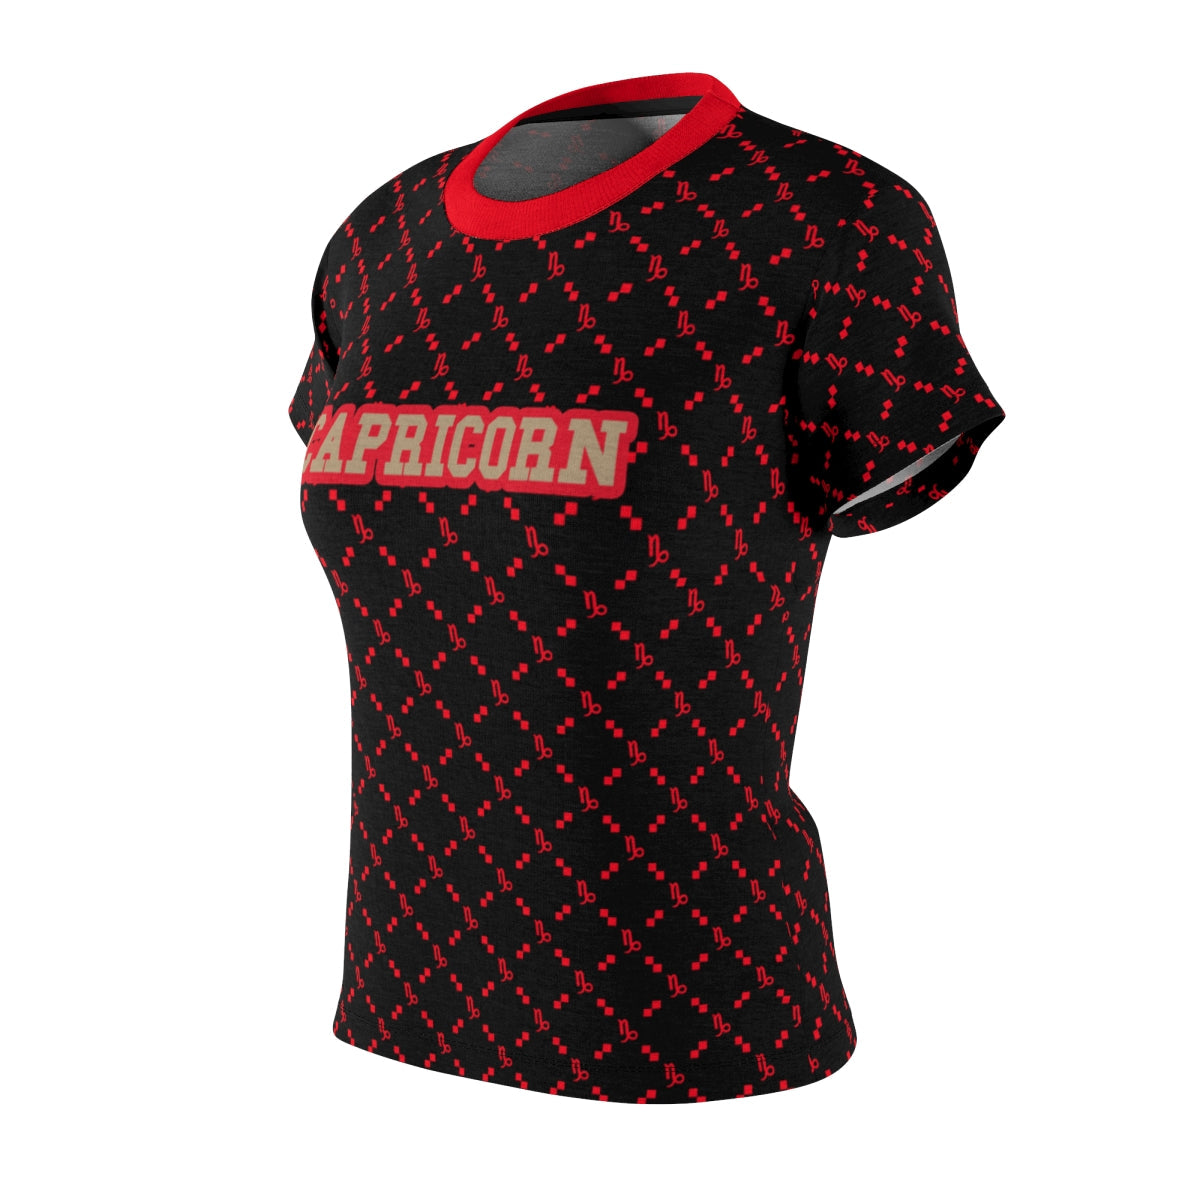 Capricorn G-Style Shirt - Red